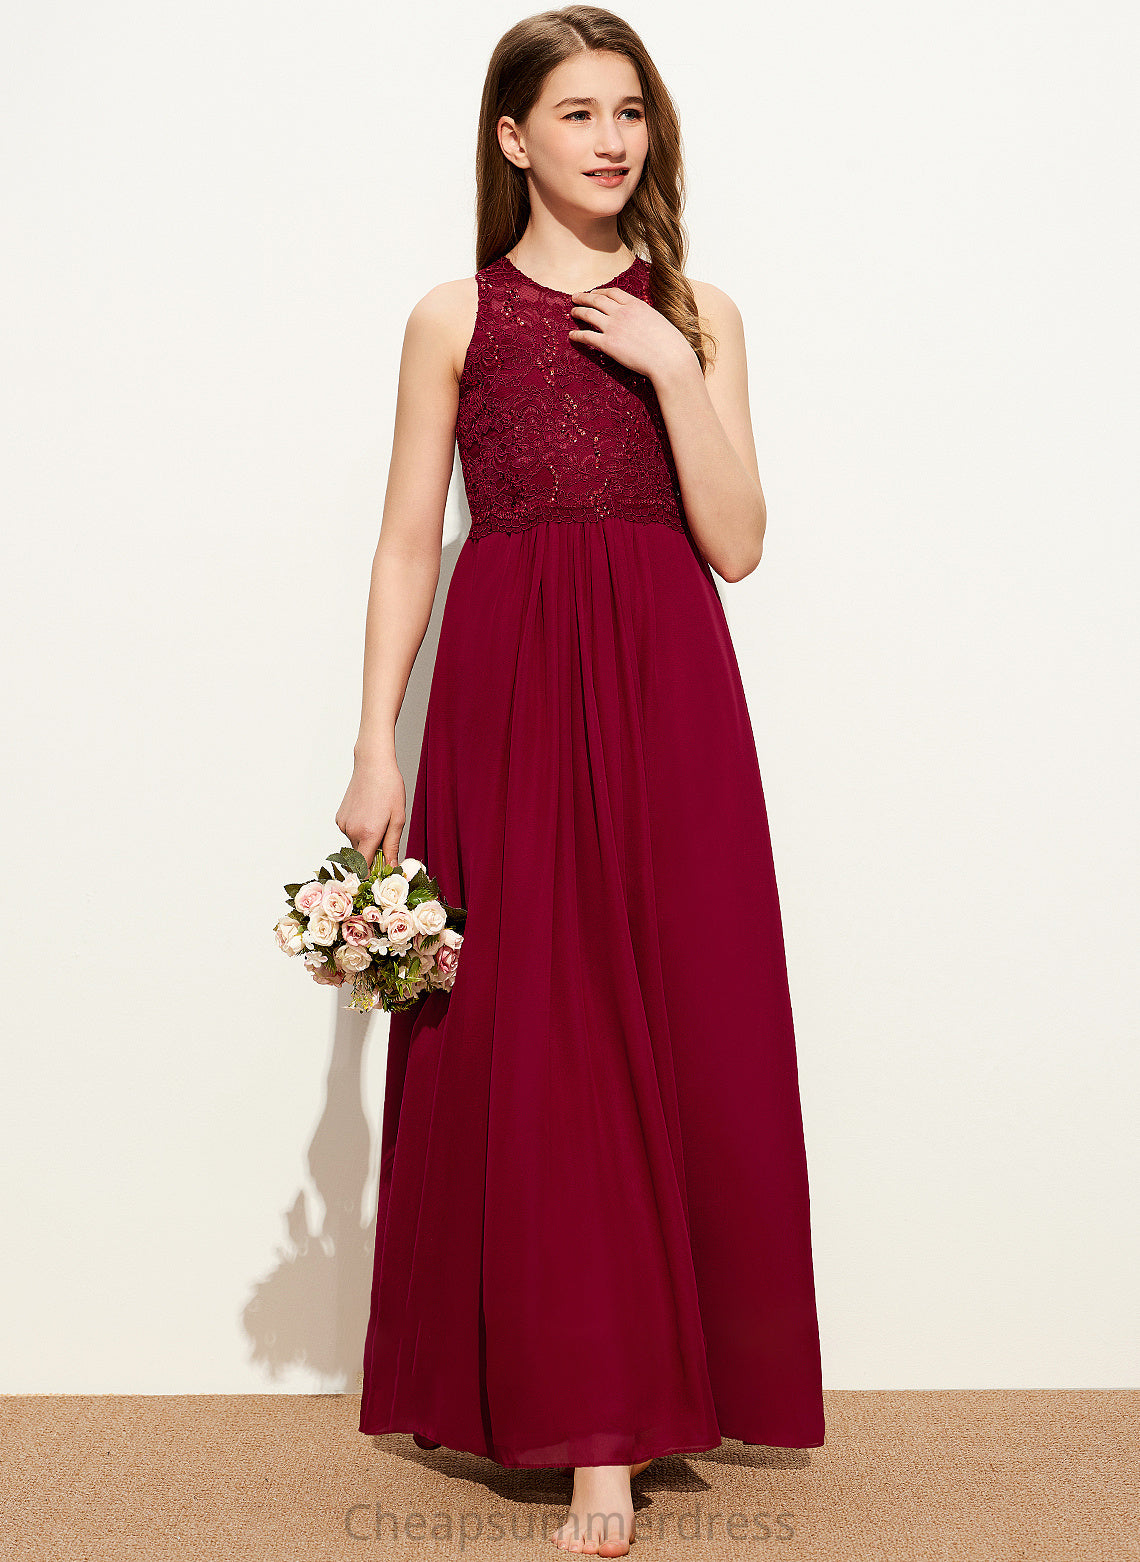 With Chiffon Scoop Junior Bridesmaid Dresses Lace A-Line Sequins Floor-Length Megan Neck